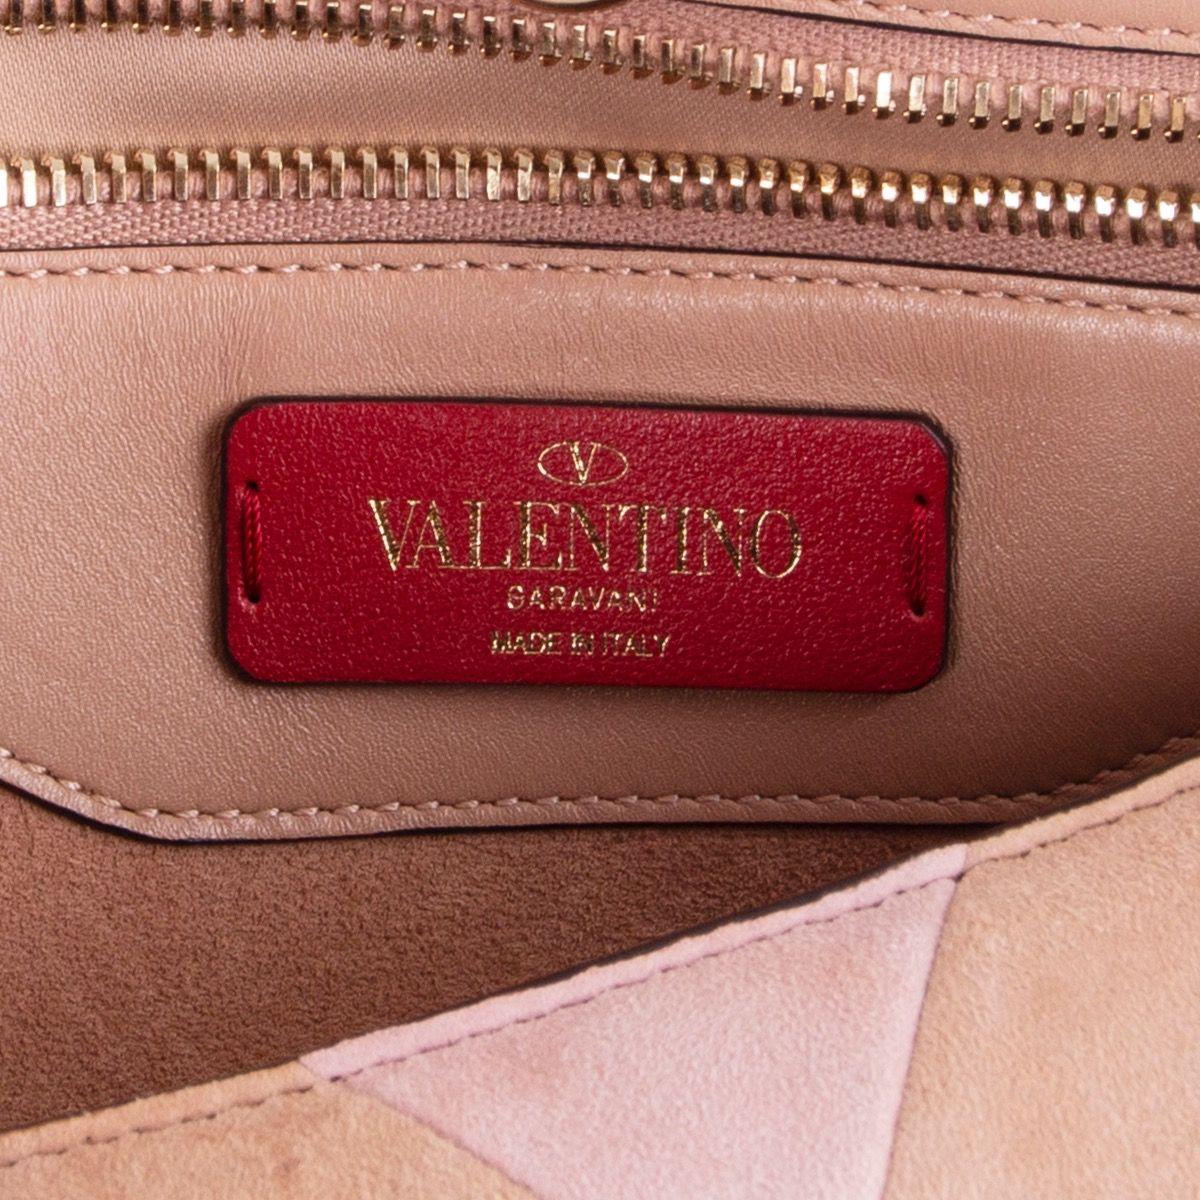 VALENTINO pink suede leather DEMILUNE SMALL CHEVRON TOTE Bag 2